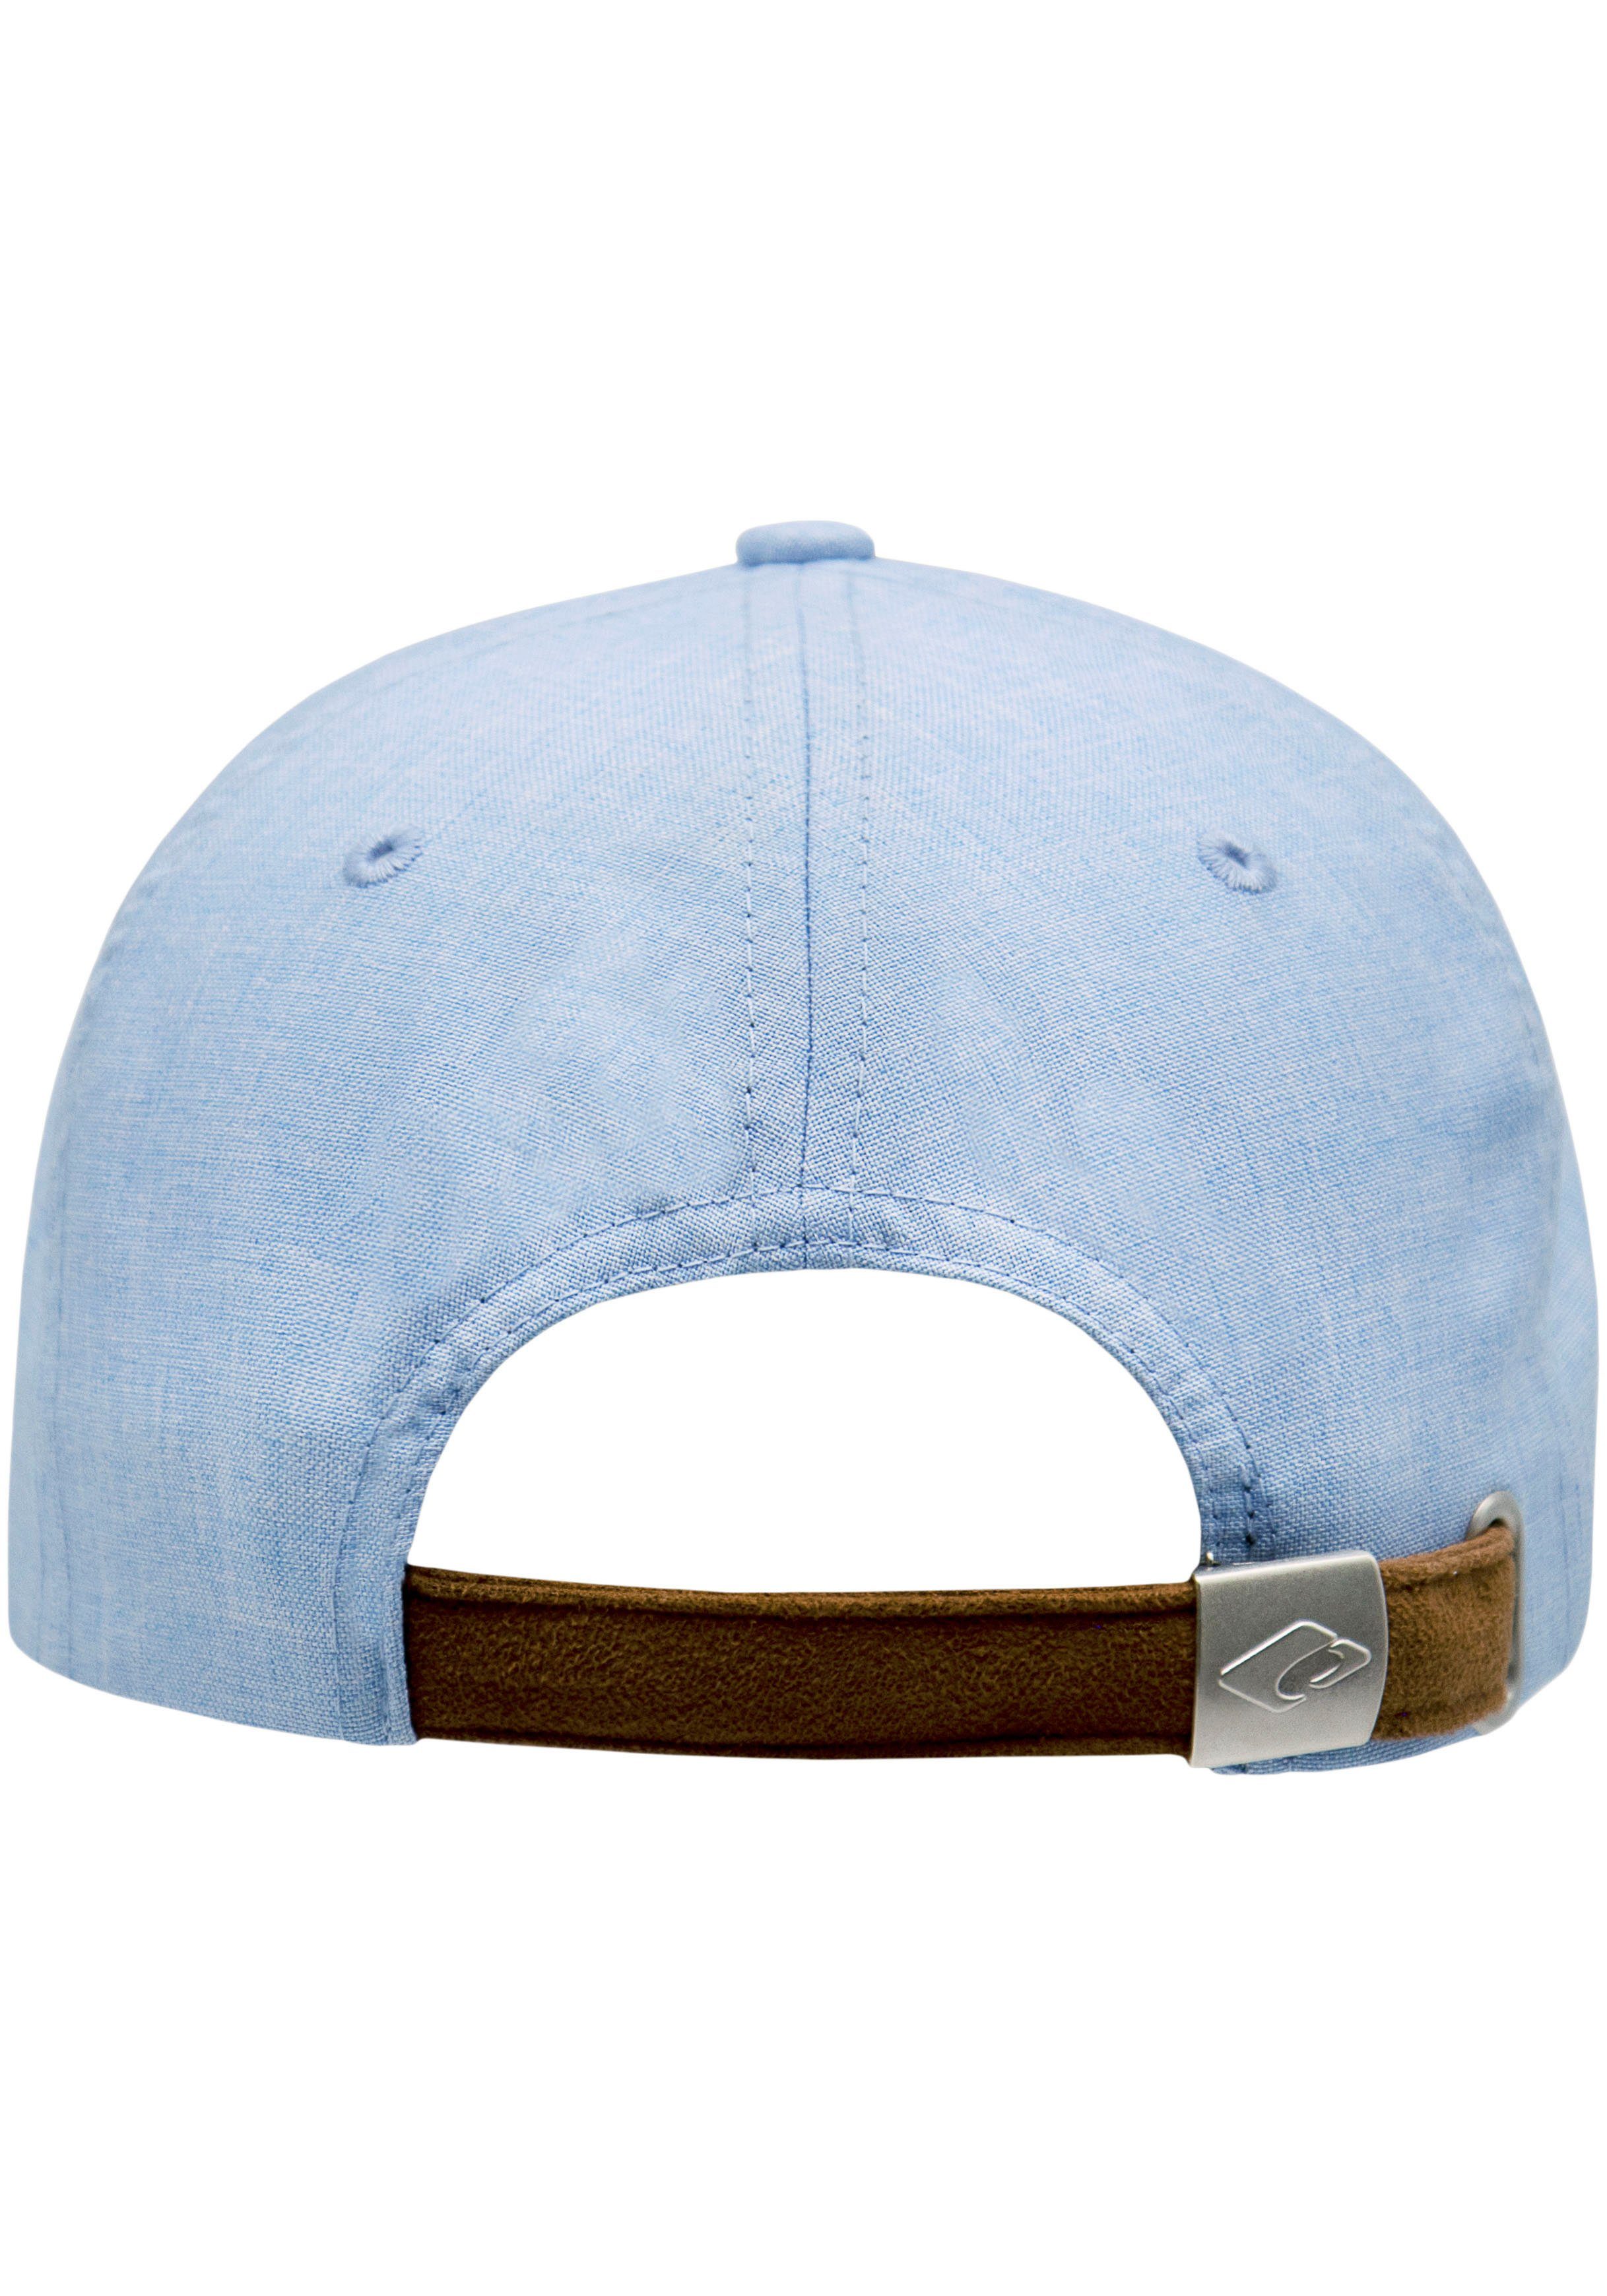 Amadora verstellbar chillouts melierter Cap hellblau in Size, One Baseball Optik, Hat